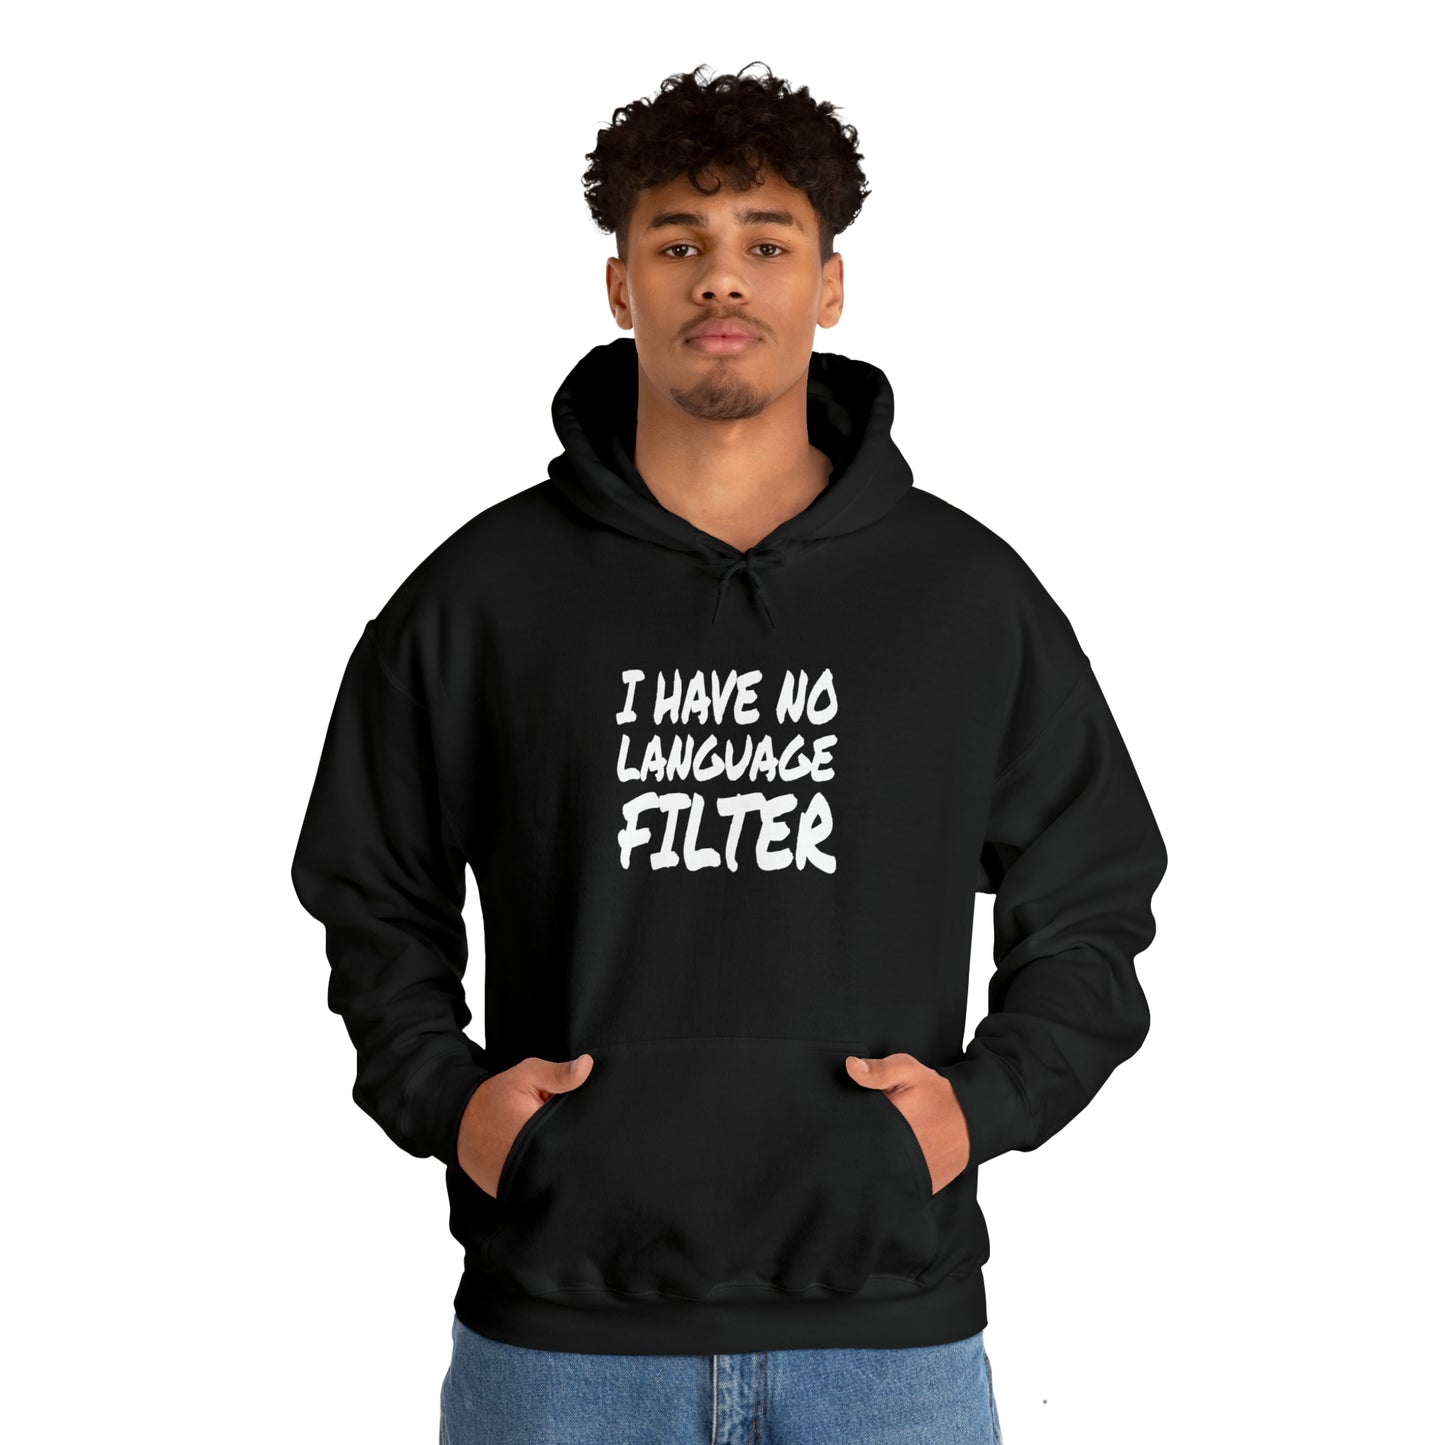 I Have no Language Filter - Hooded Sweatshirt